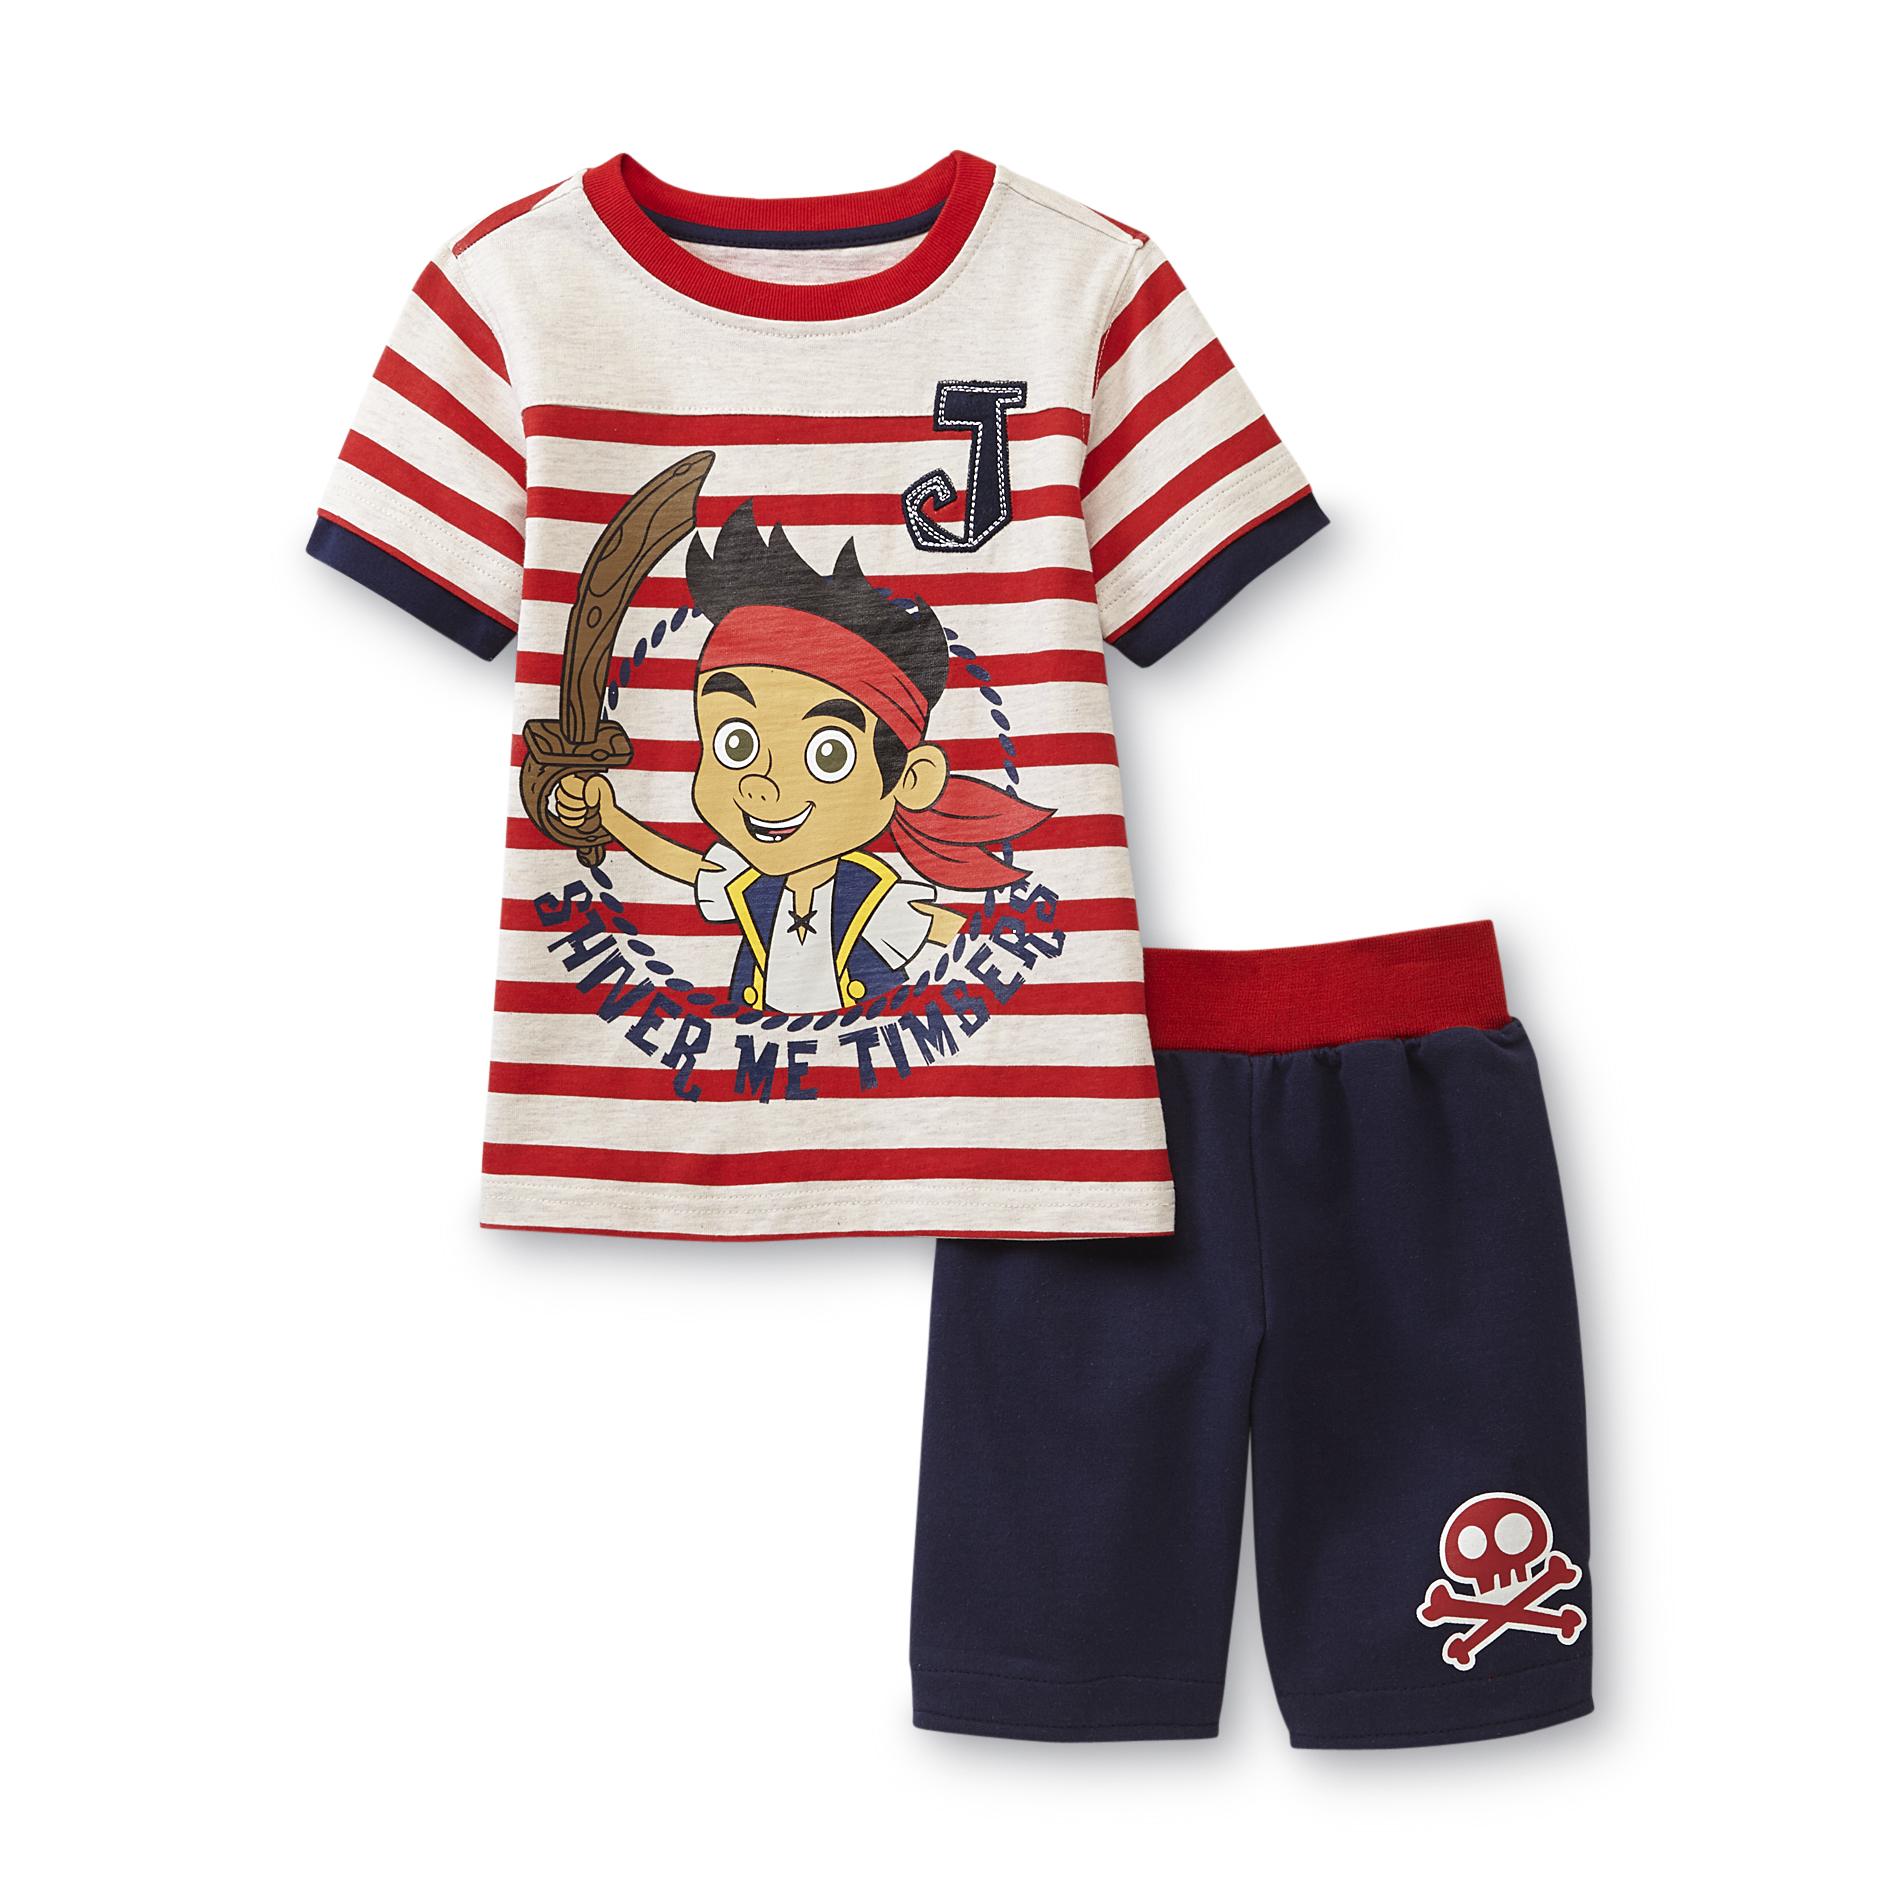 Disney Toddler Boy's Graphic T-Shirt & Shorts - Jake & The Never Land Pirates